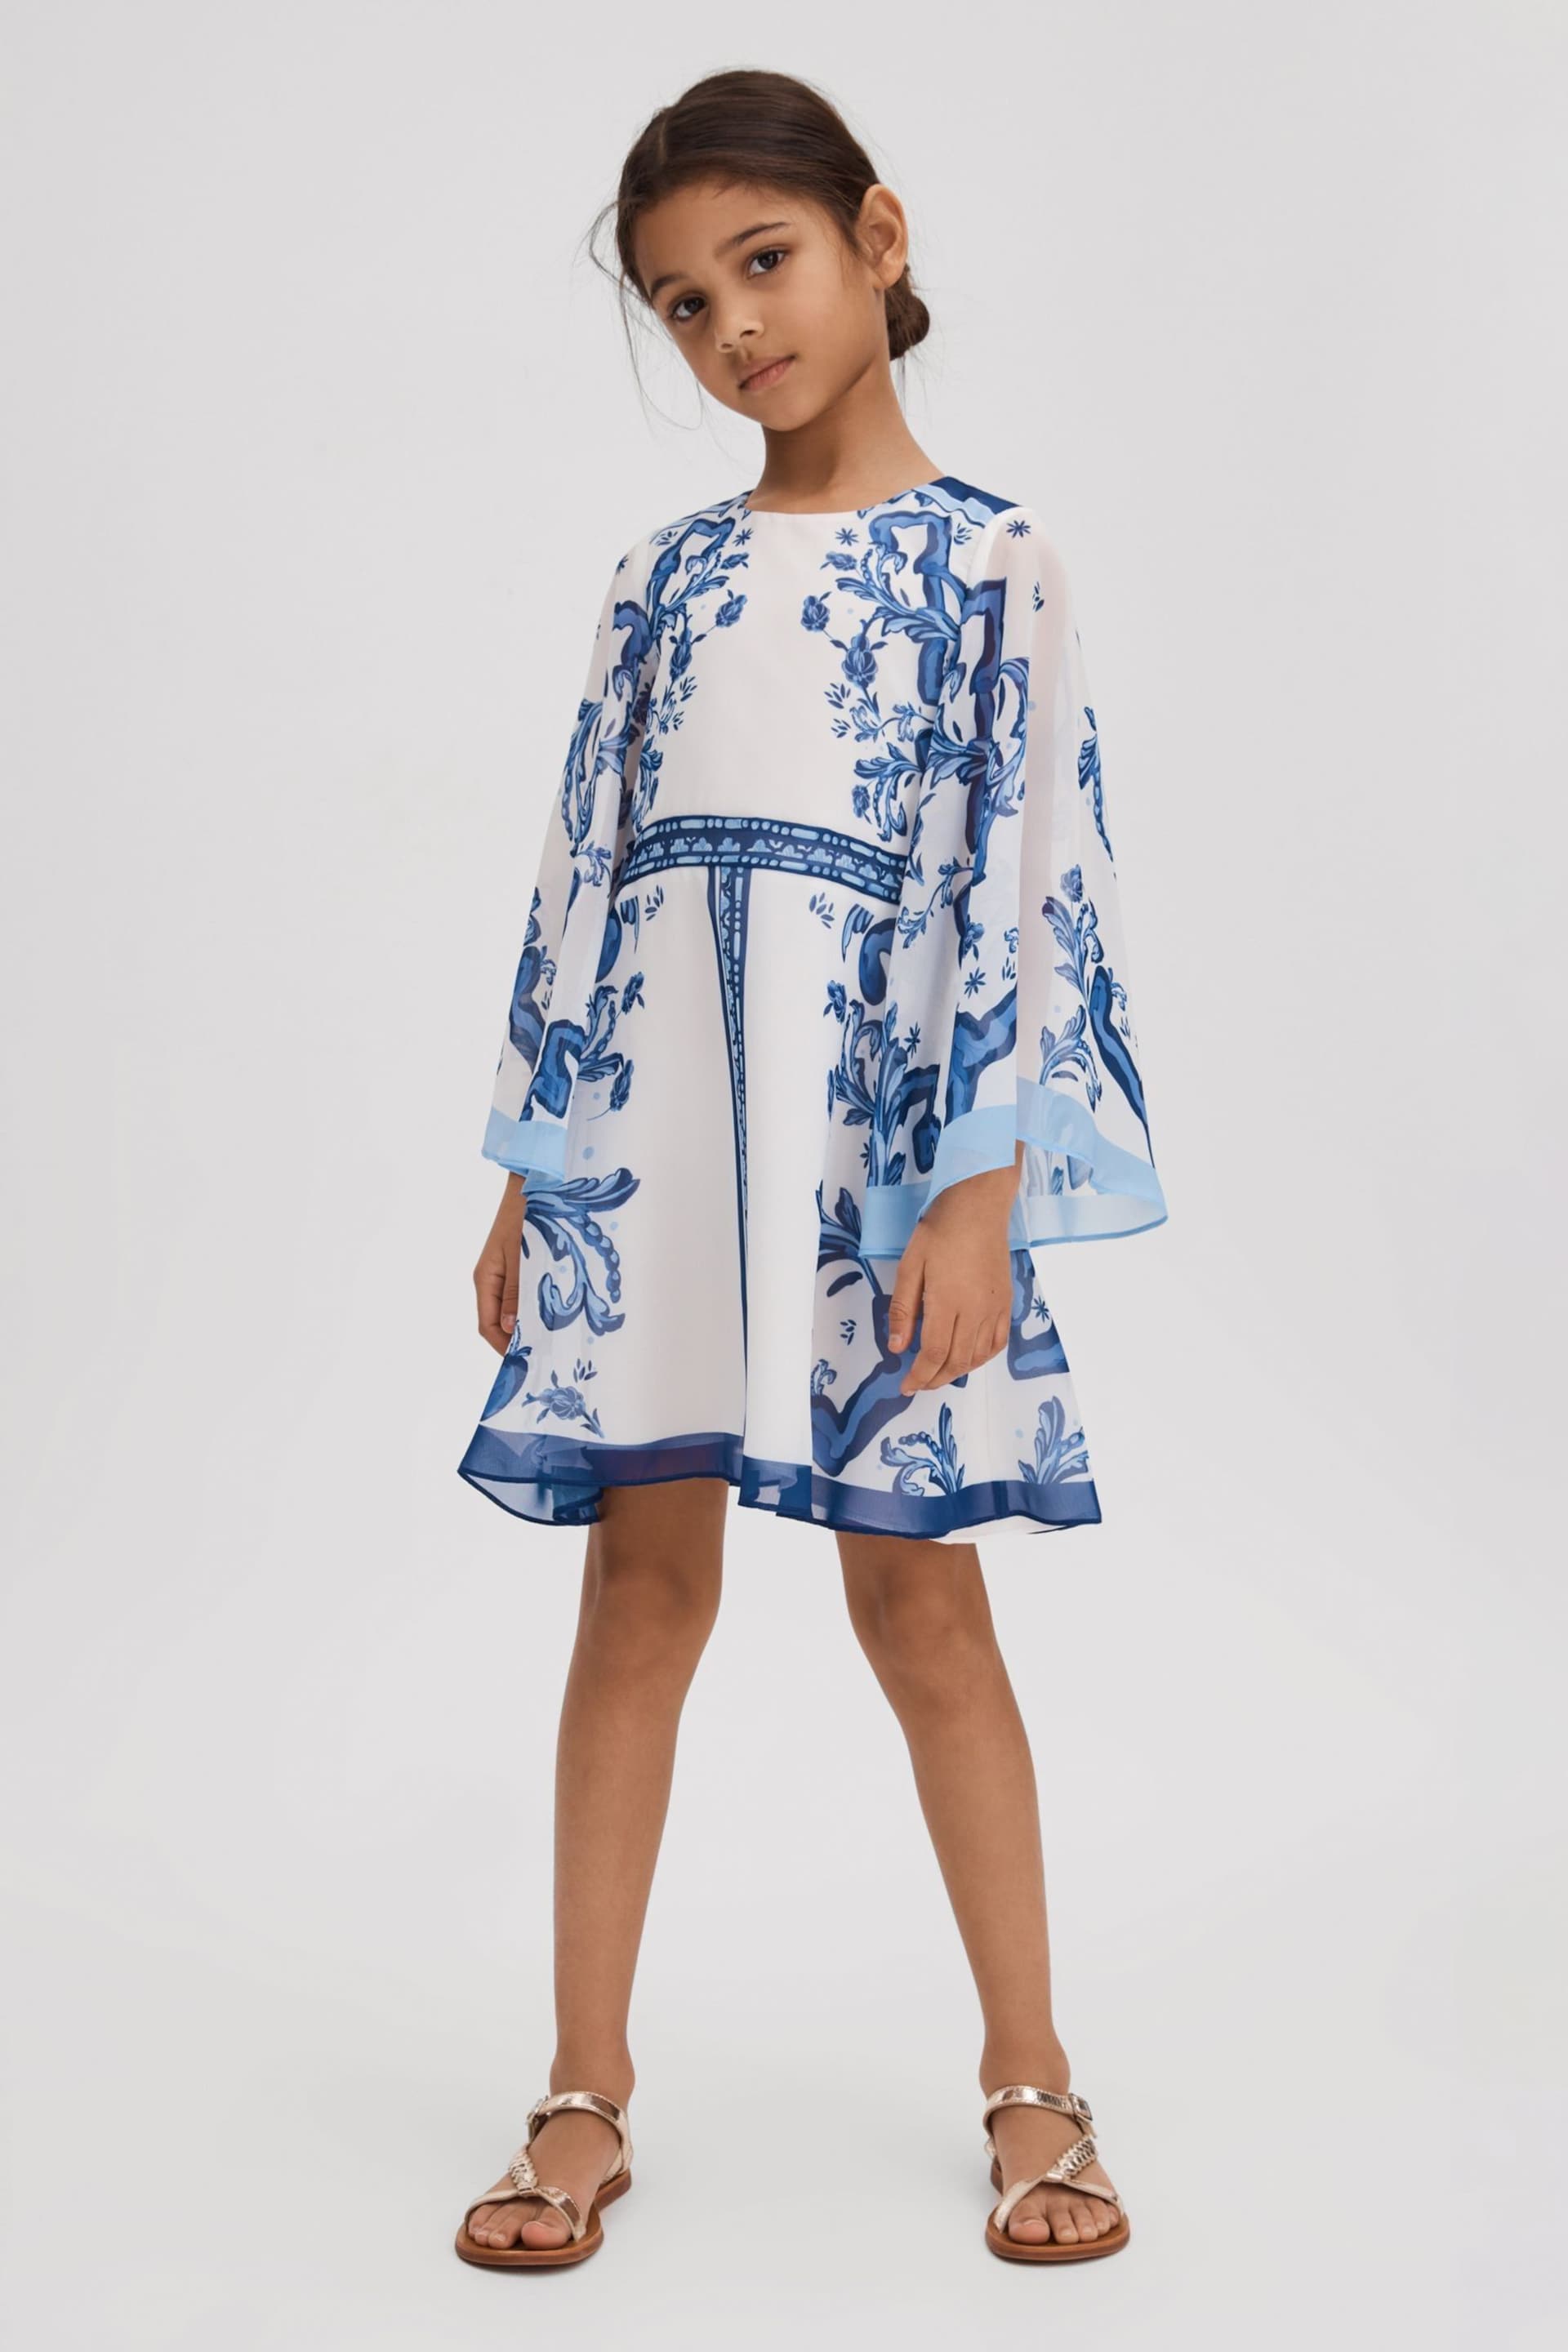 Reiss Blue Print Andra Junior Tile Print Flare Sleeve Dress - Image 1 of 4